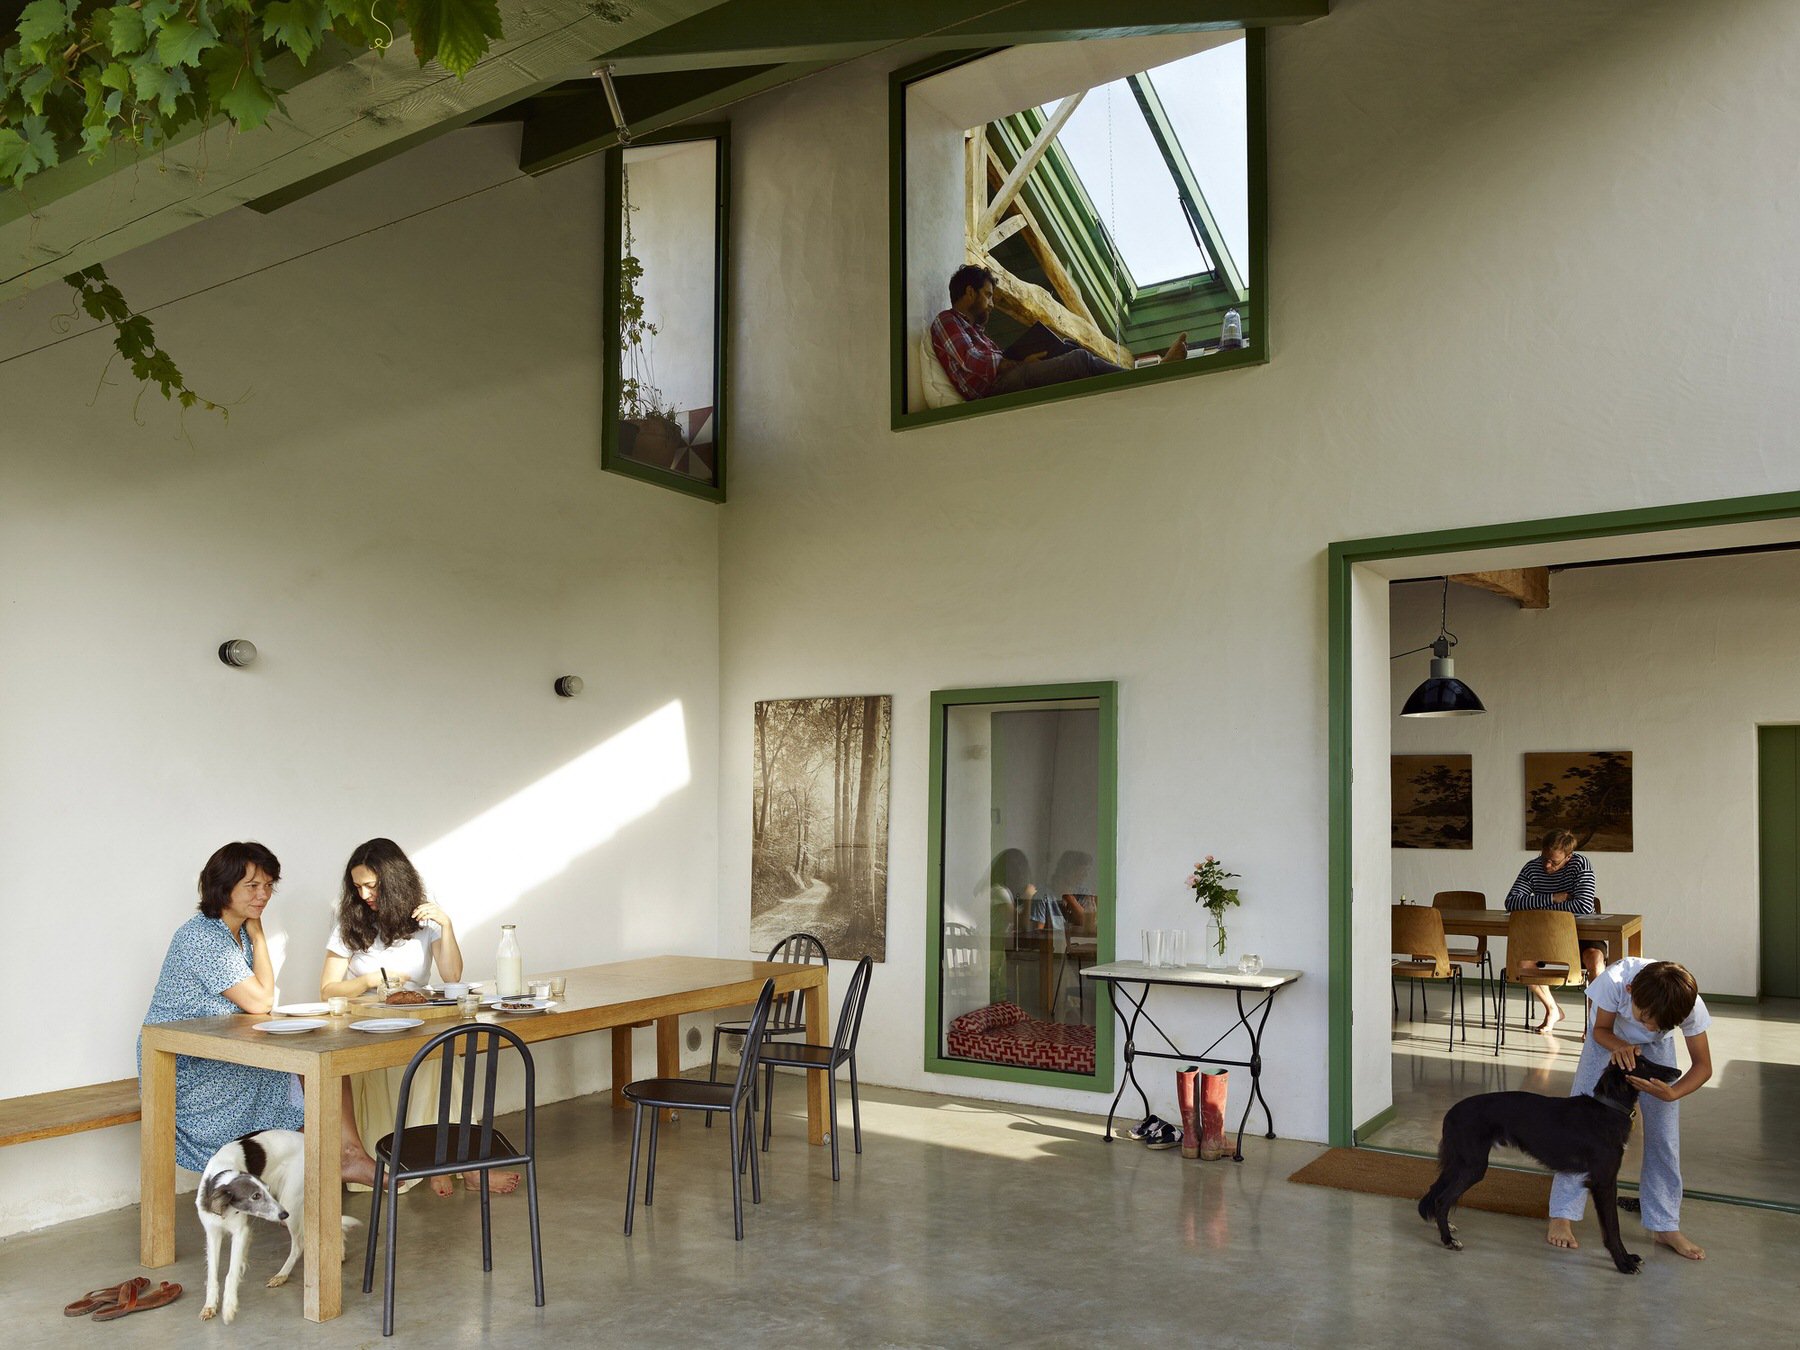 Antiguo establo abandonado convertido en casa moderna en Francia comedor con varios niveles